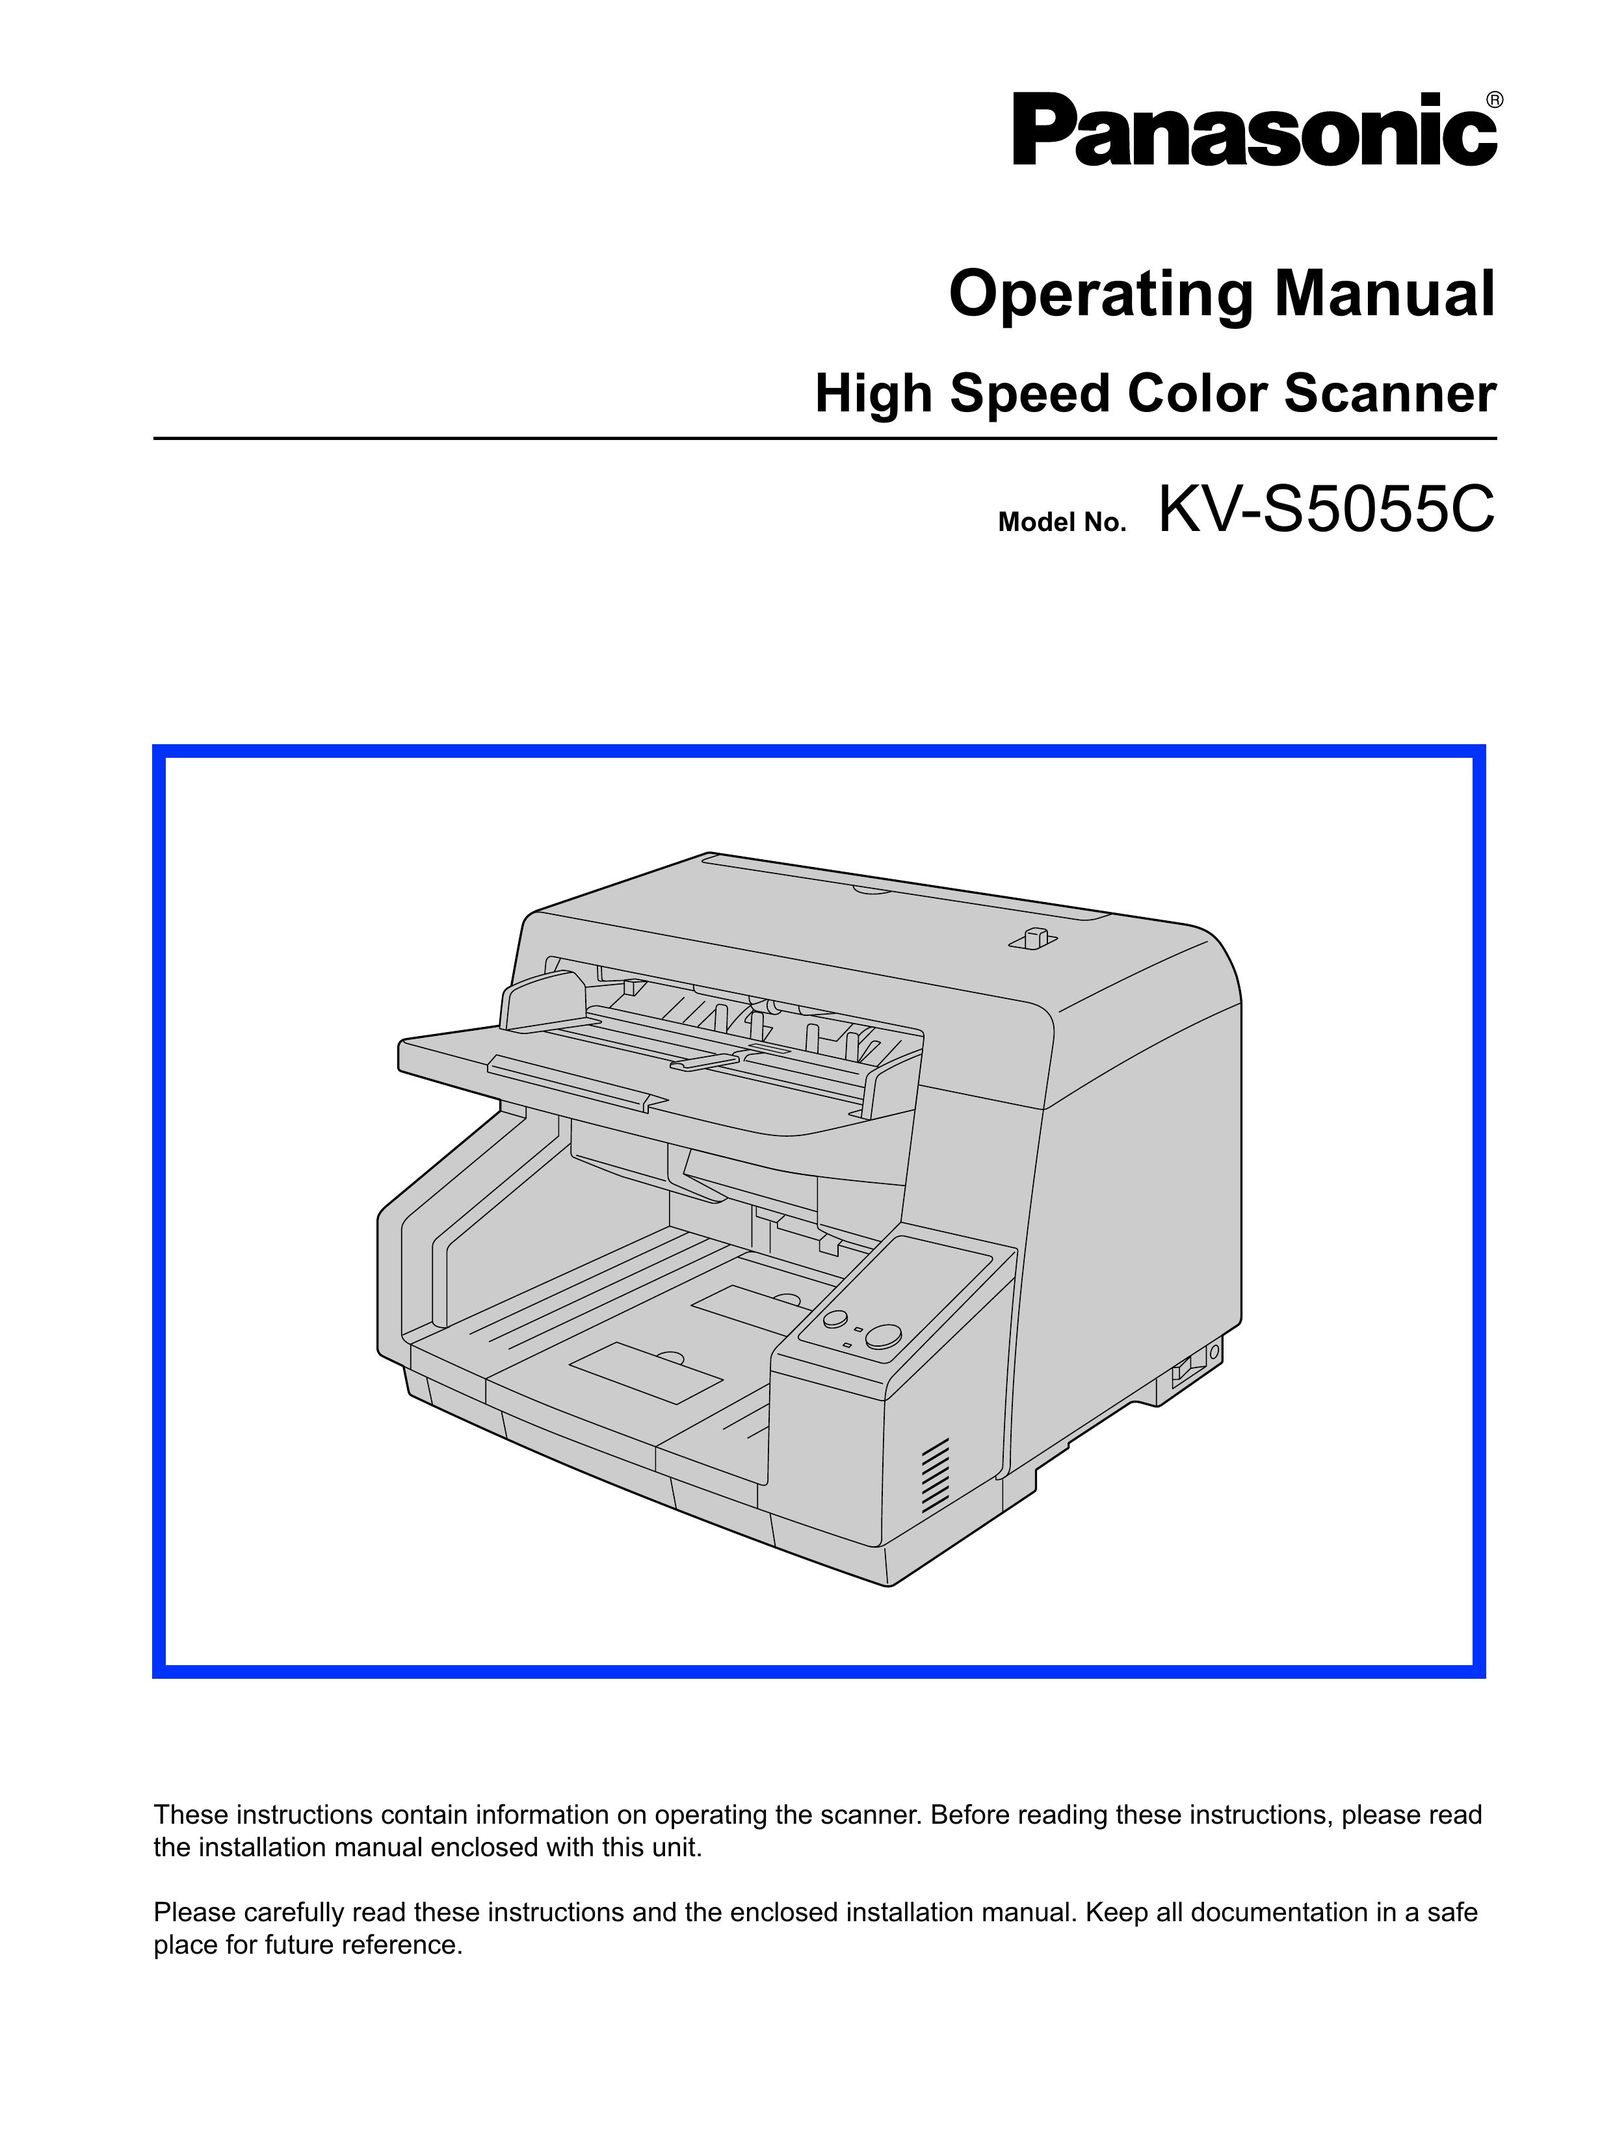 Panasonic KV-S5055C Scanner User Manual